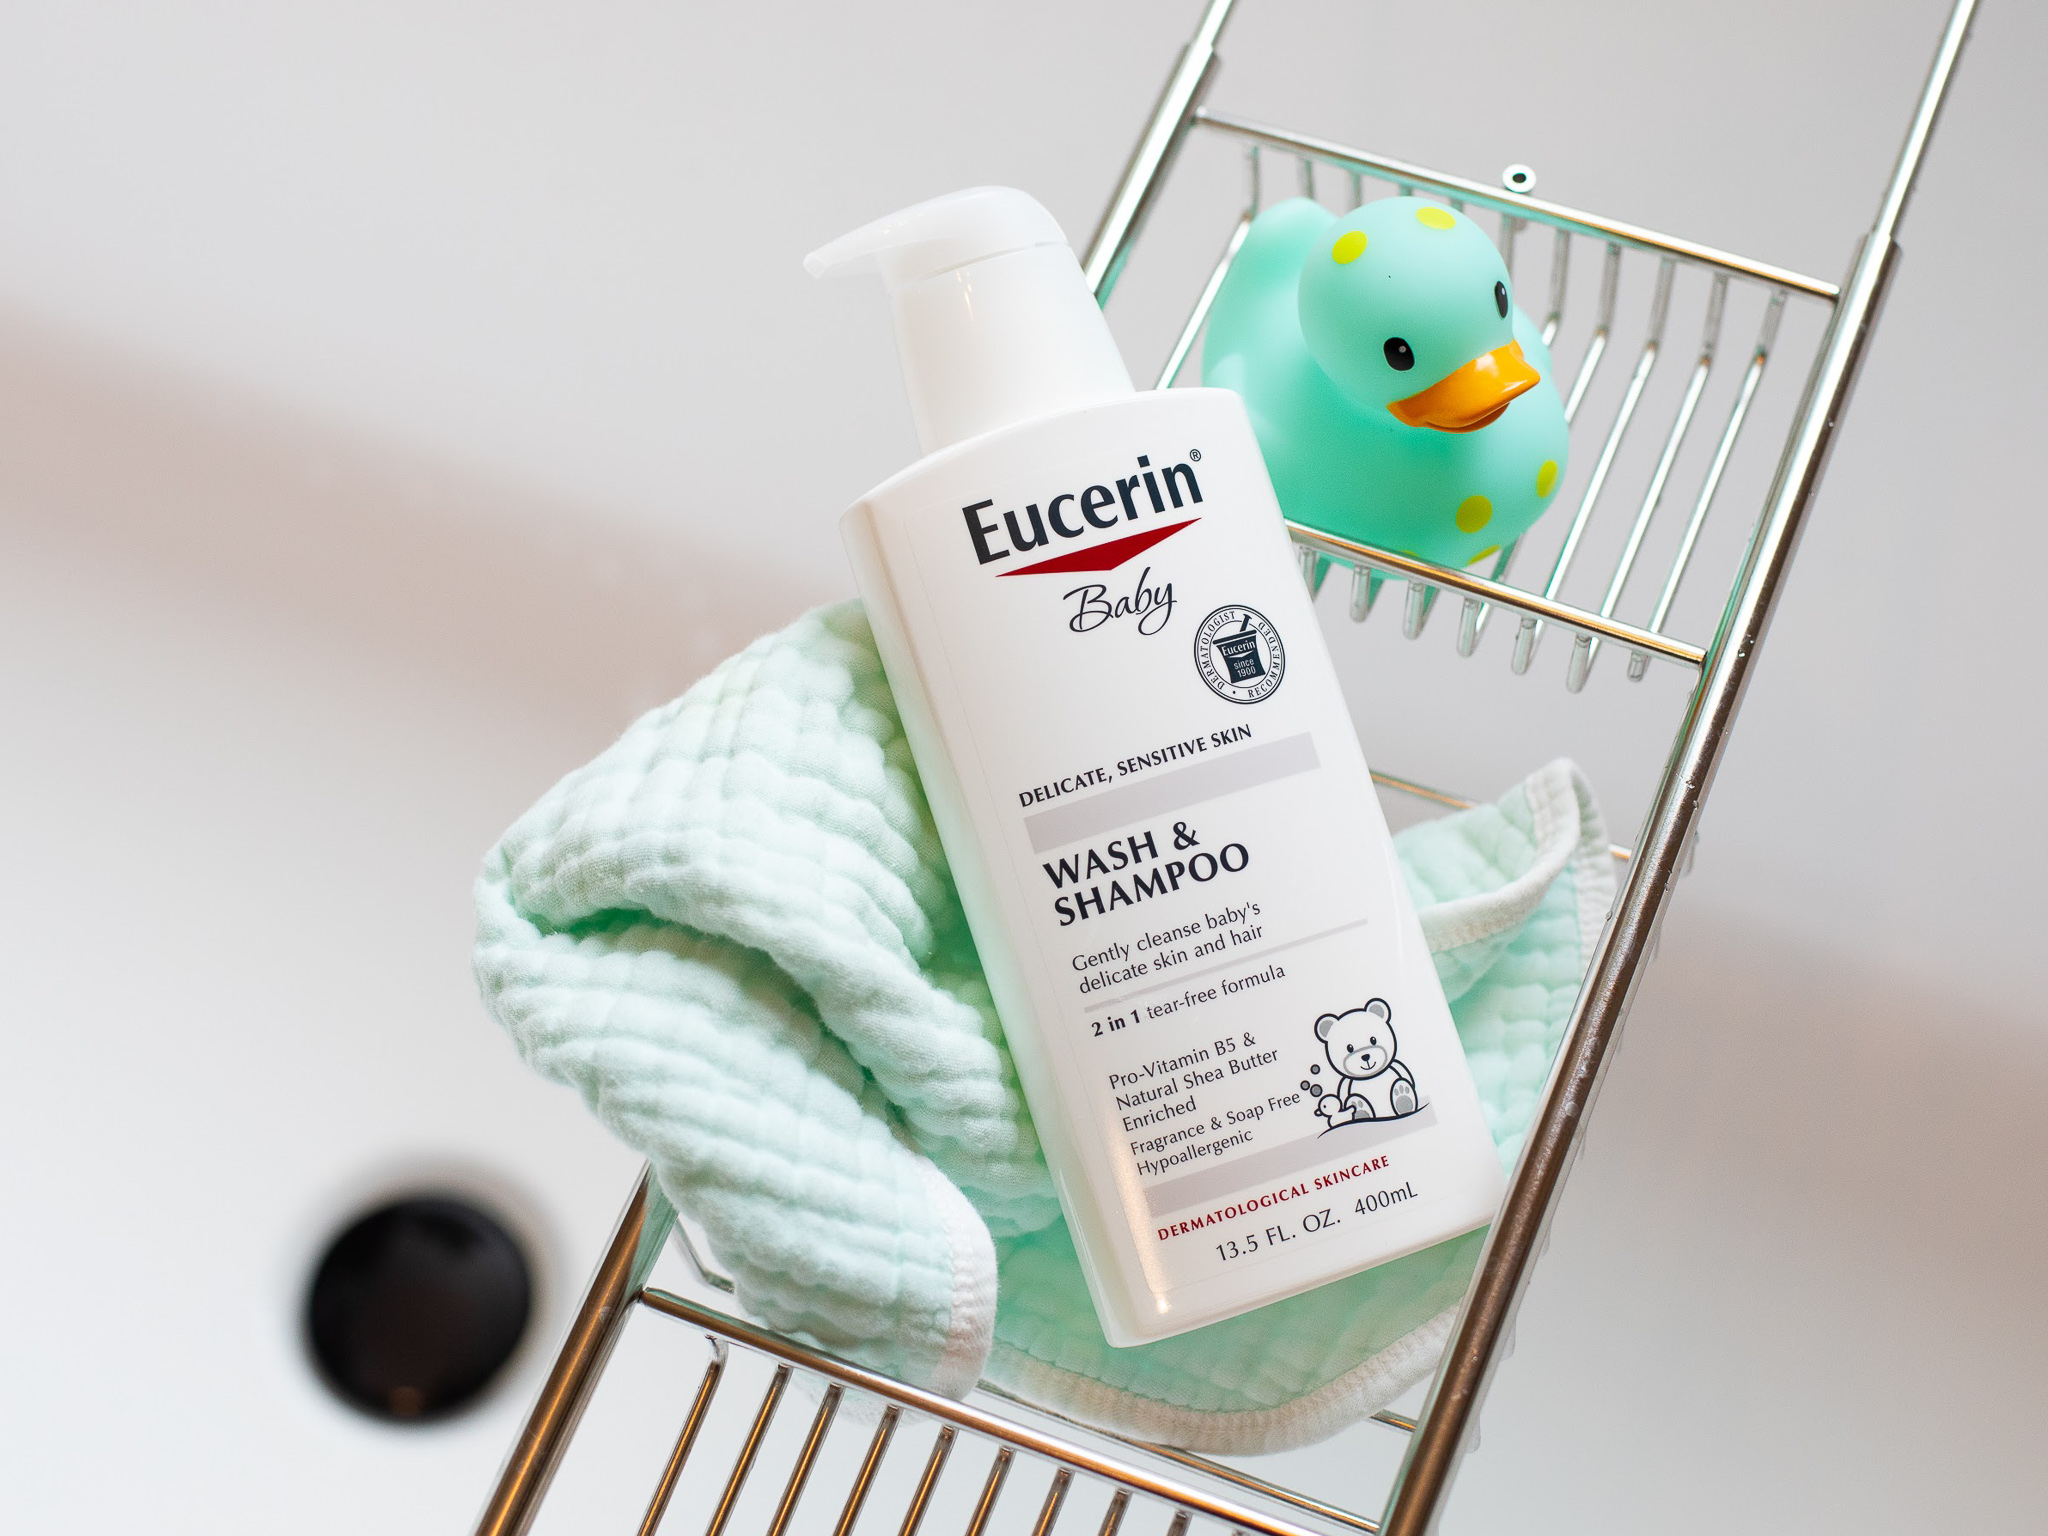 Eucerin Baby Wash & Shampoo Just $4.29 At Kroger (Regular Price $8.99)